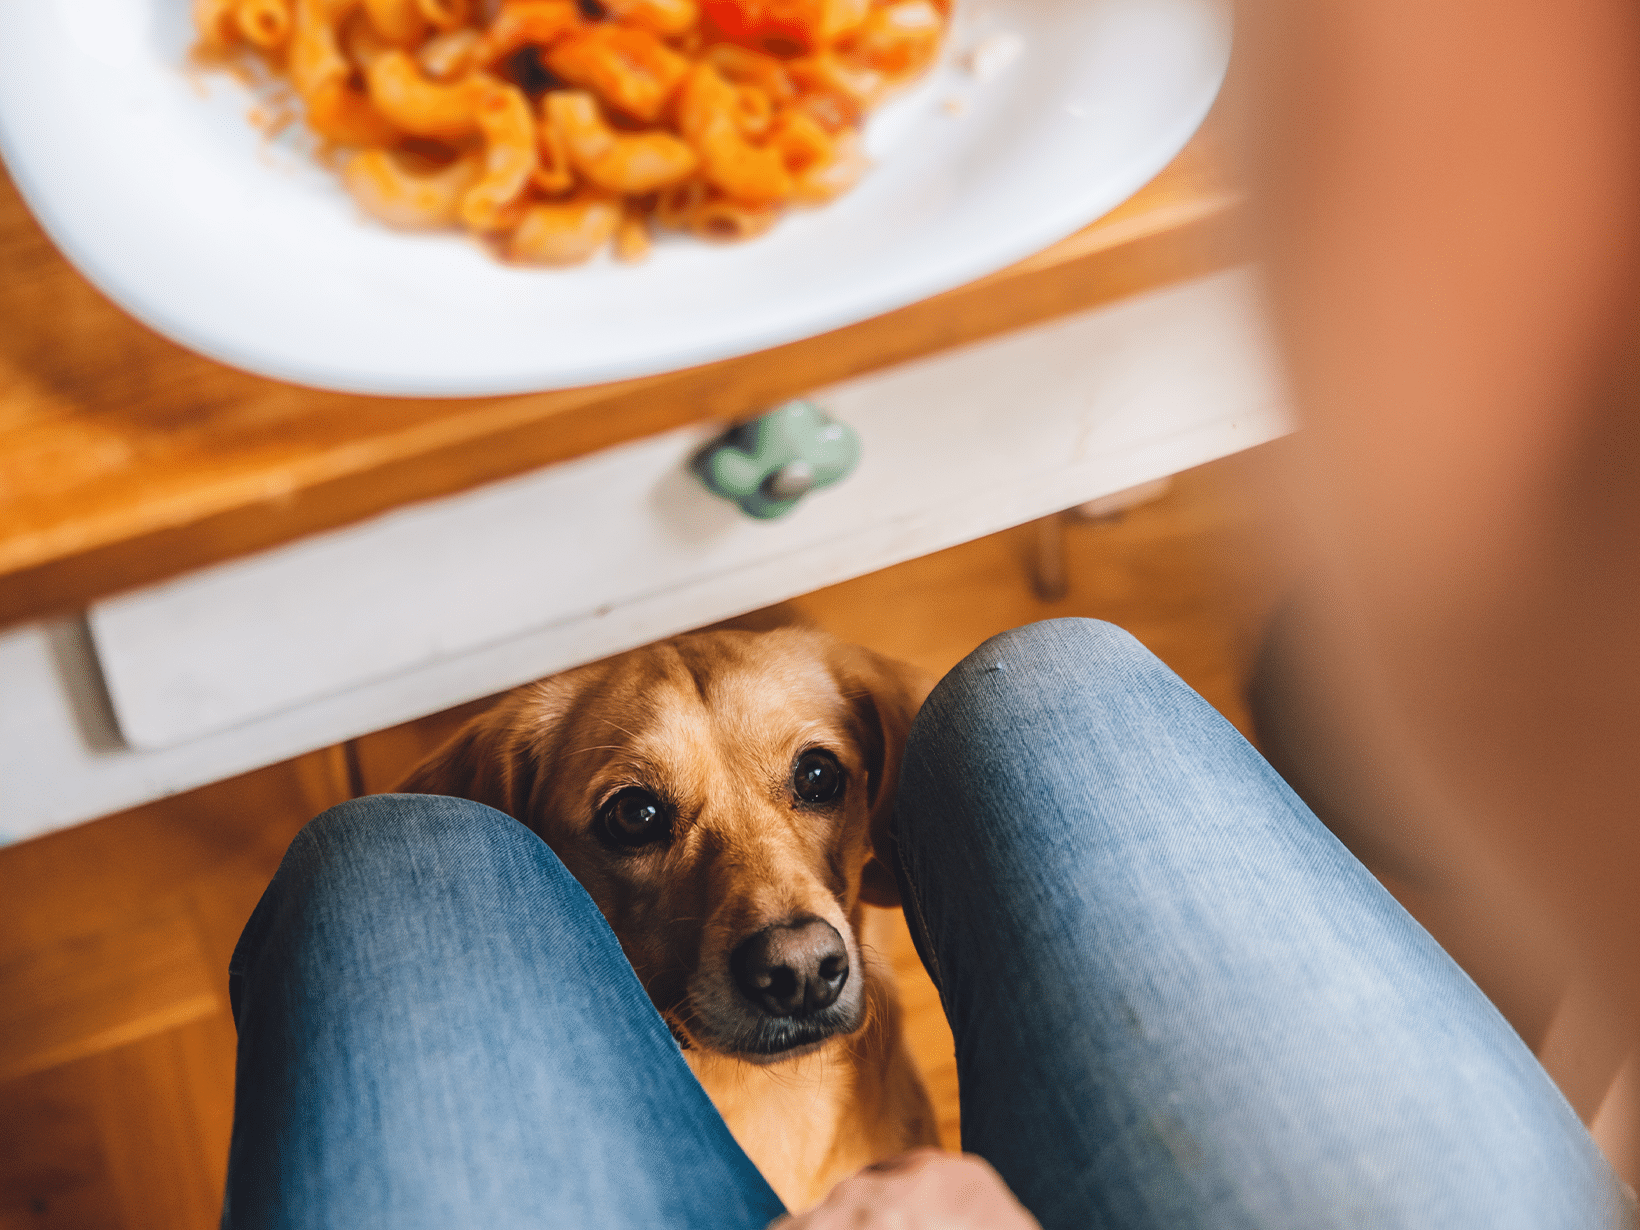 Mag een hond macaroni?